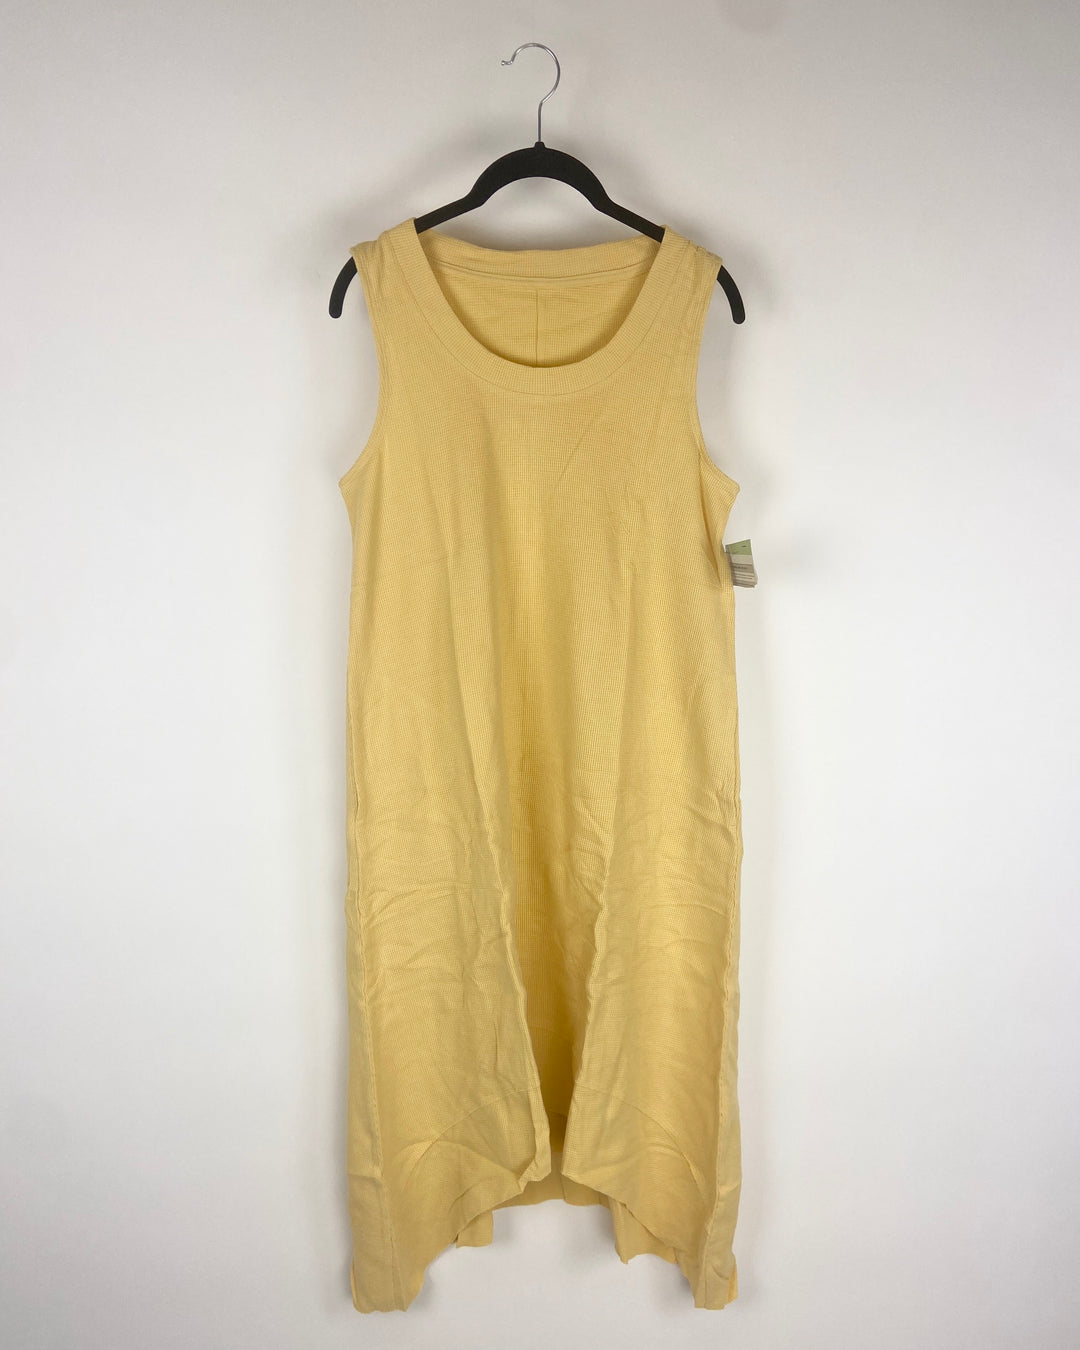 Sleeveless Dress - Size 6-8 and 1X